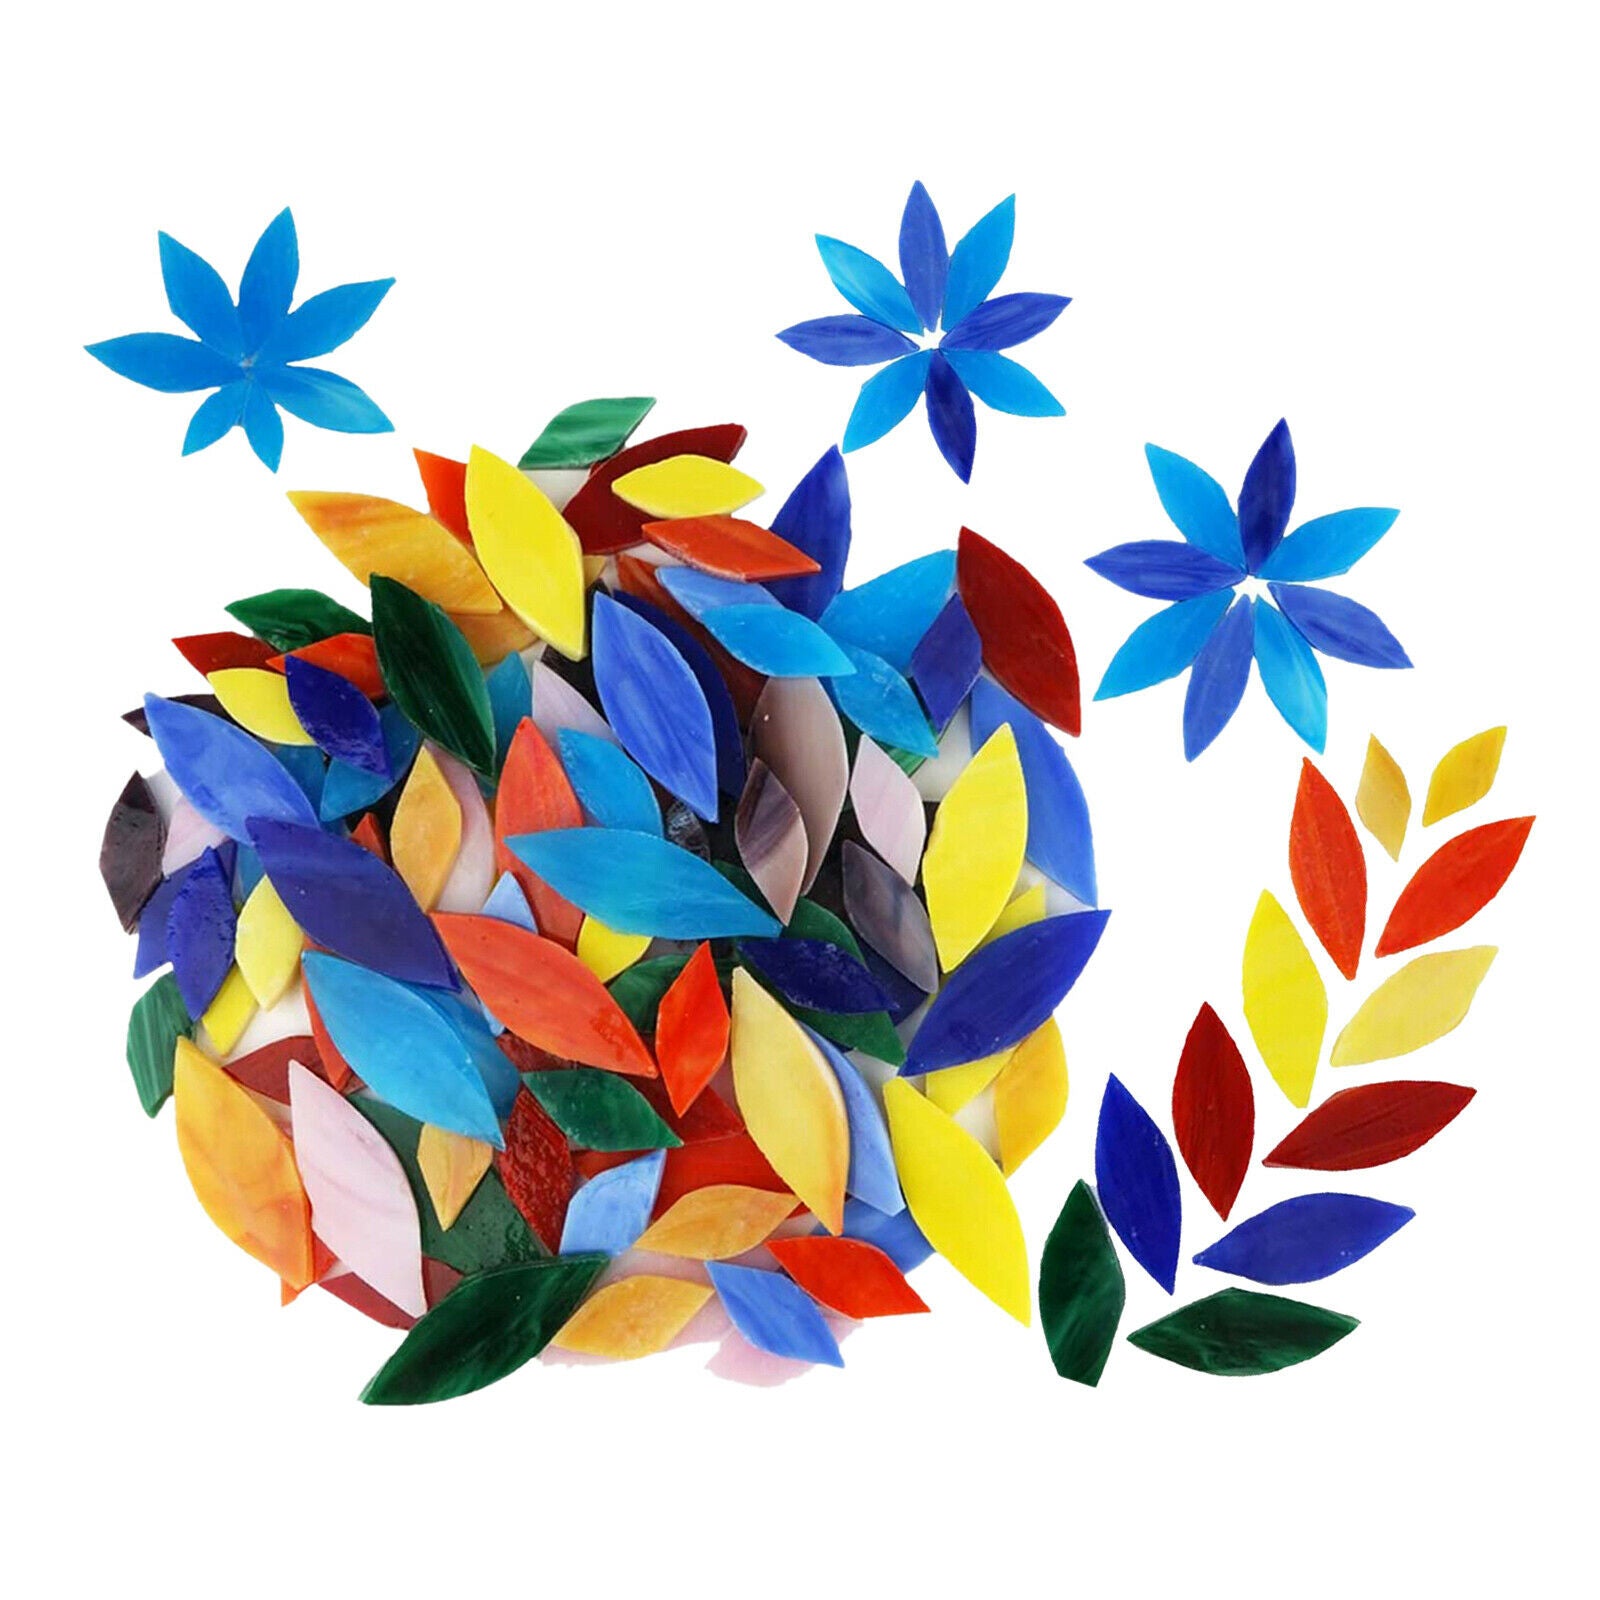 300 Pcs Assorted Colors Petal Mosaic Tiles Hand-Cut Stained Glass Pots